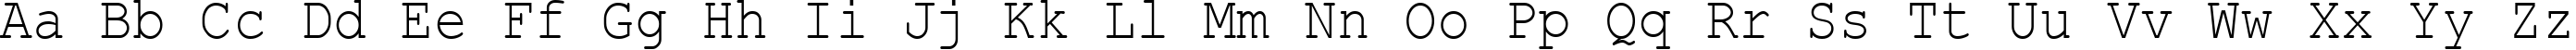 Пример написания английского алфавита шрифтом Courier New Cyr_90n